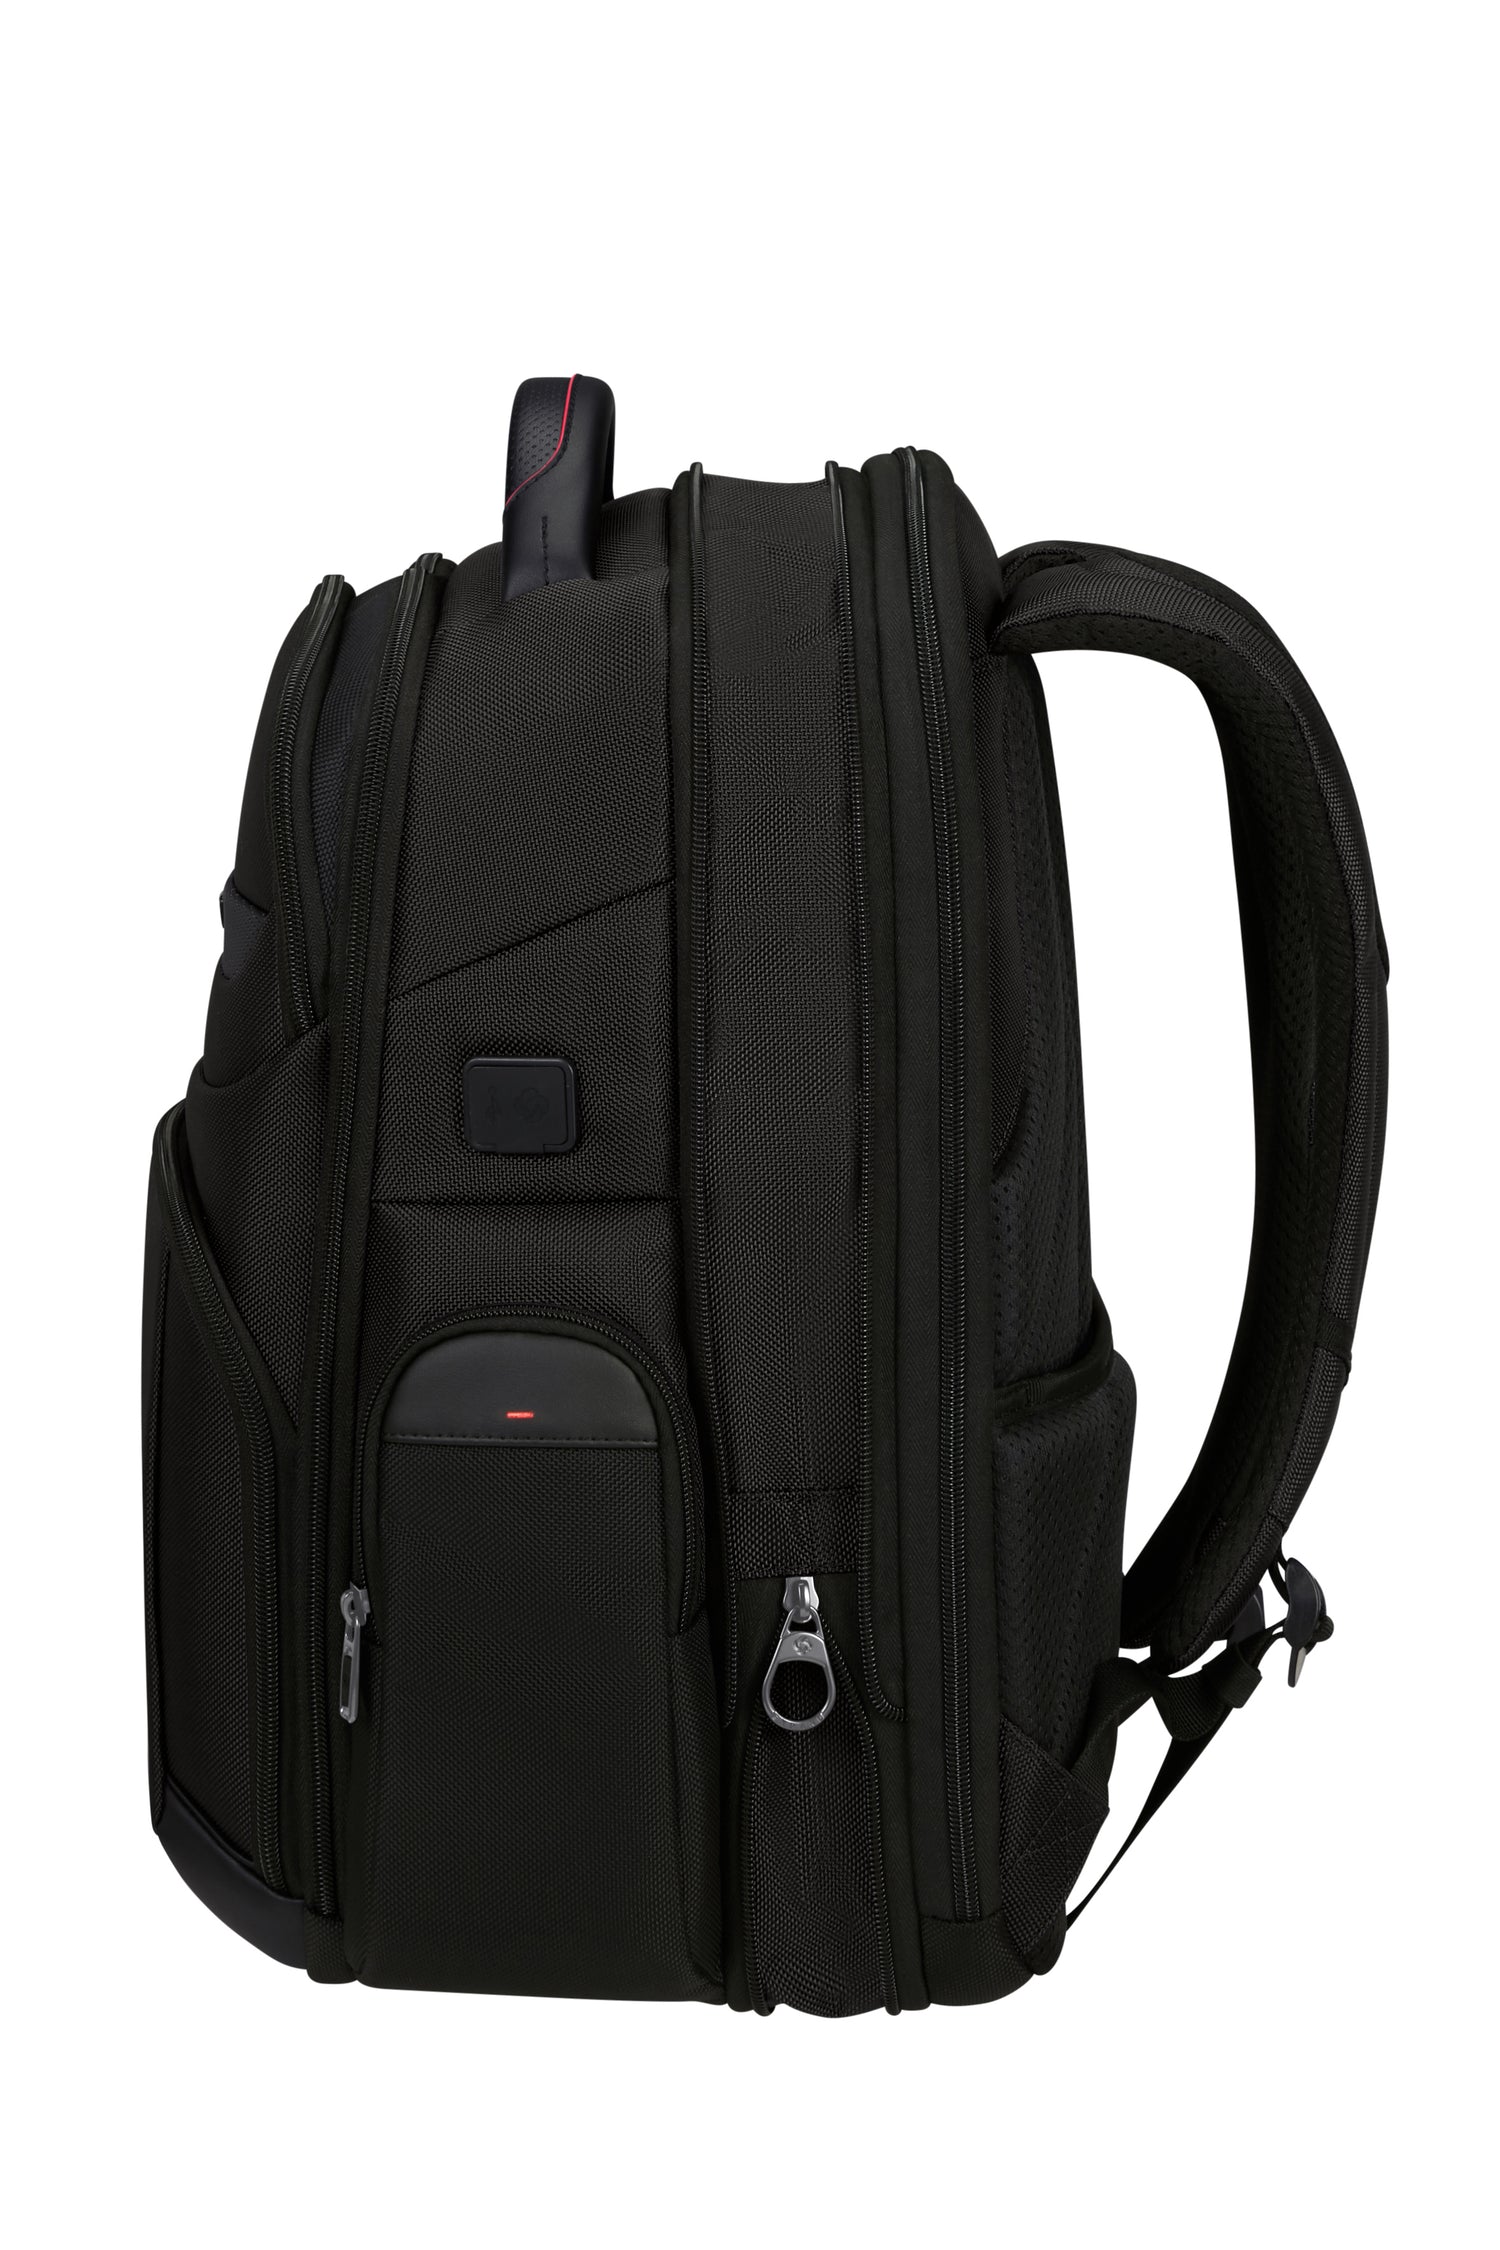 Samsonite PRO-DLX 6 - 15.5 EXP Backpack